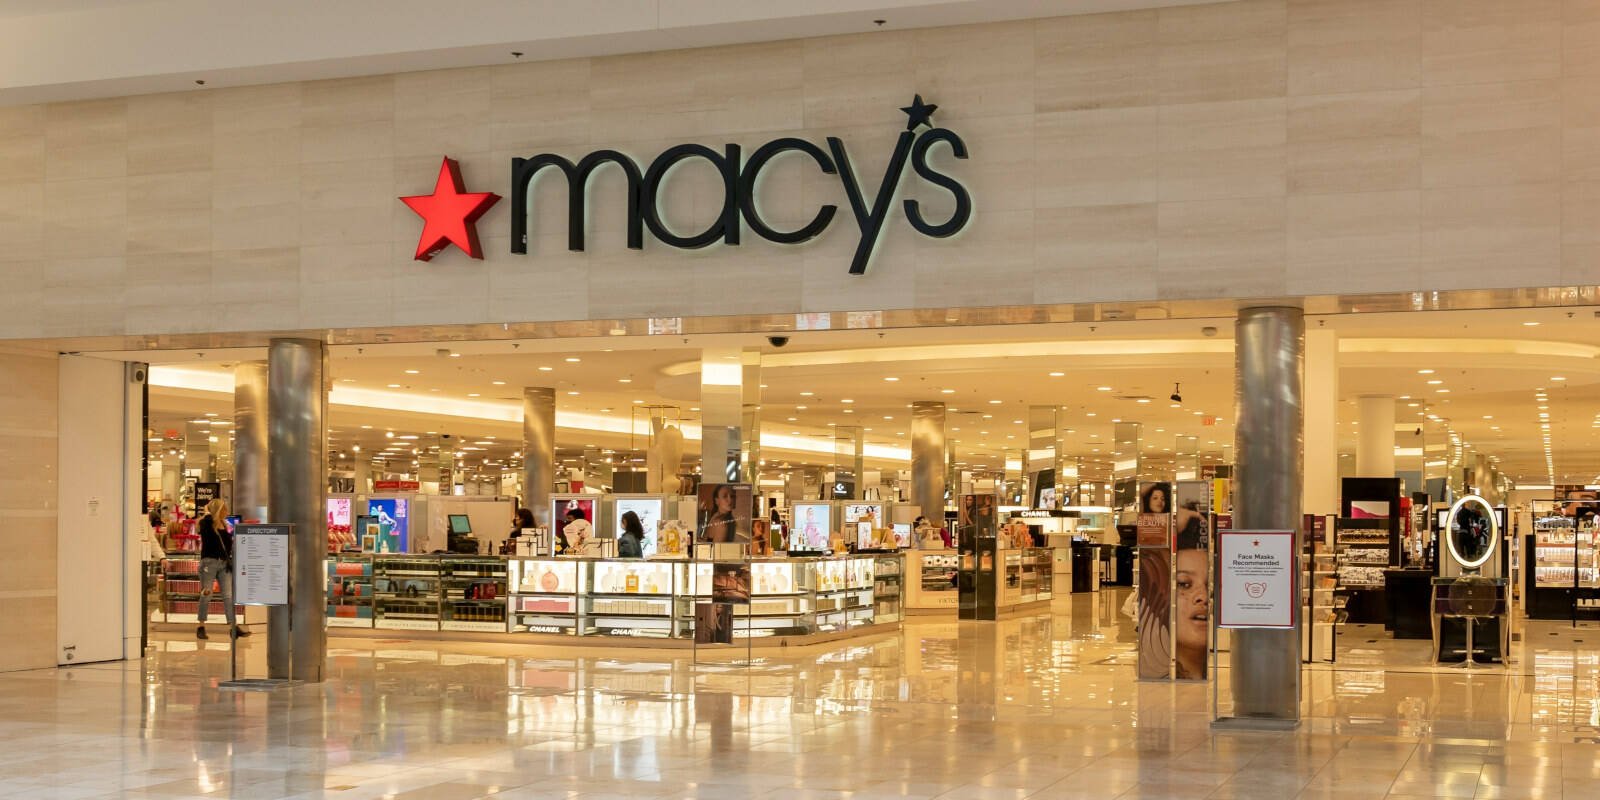 Macy's in Sunglass Hut sta tožila zaradi aretacije zaradi prepoznavanja obraza